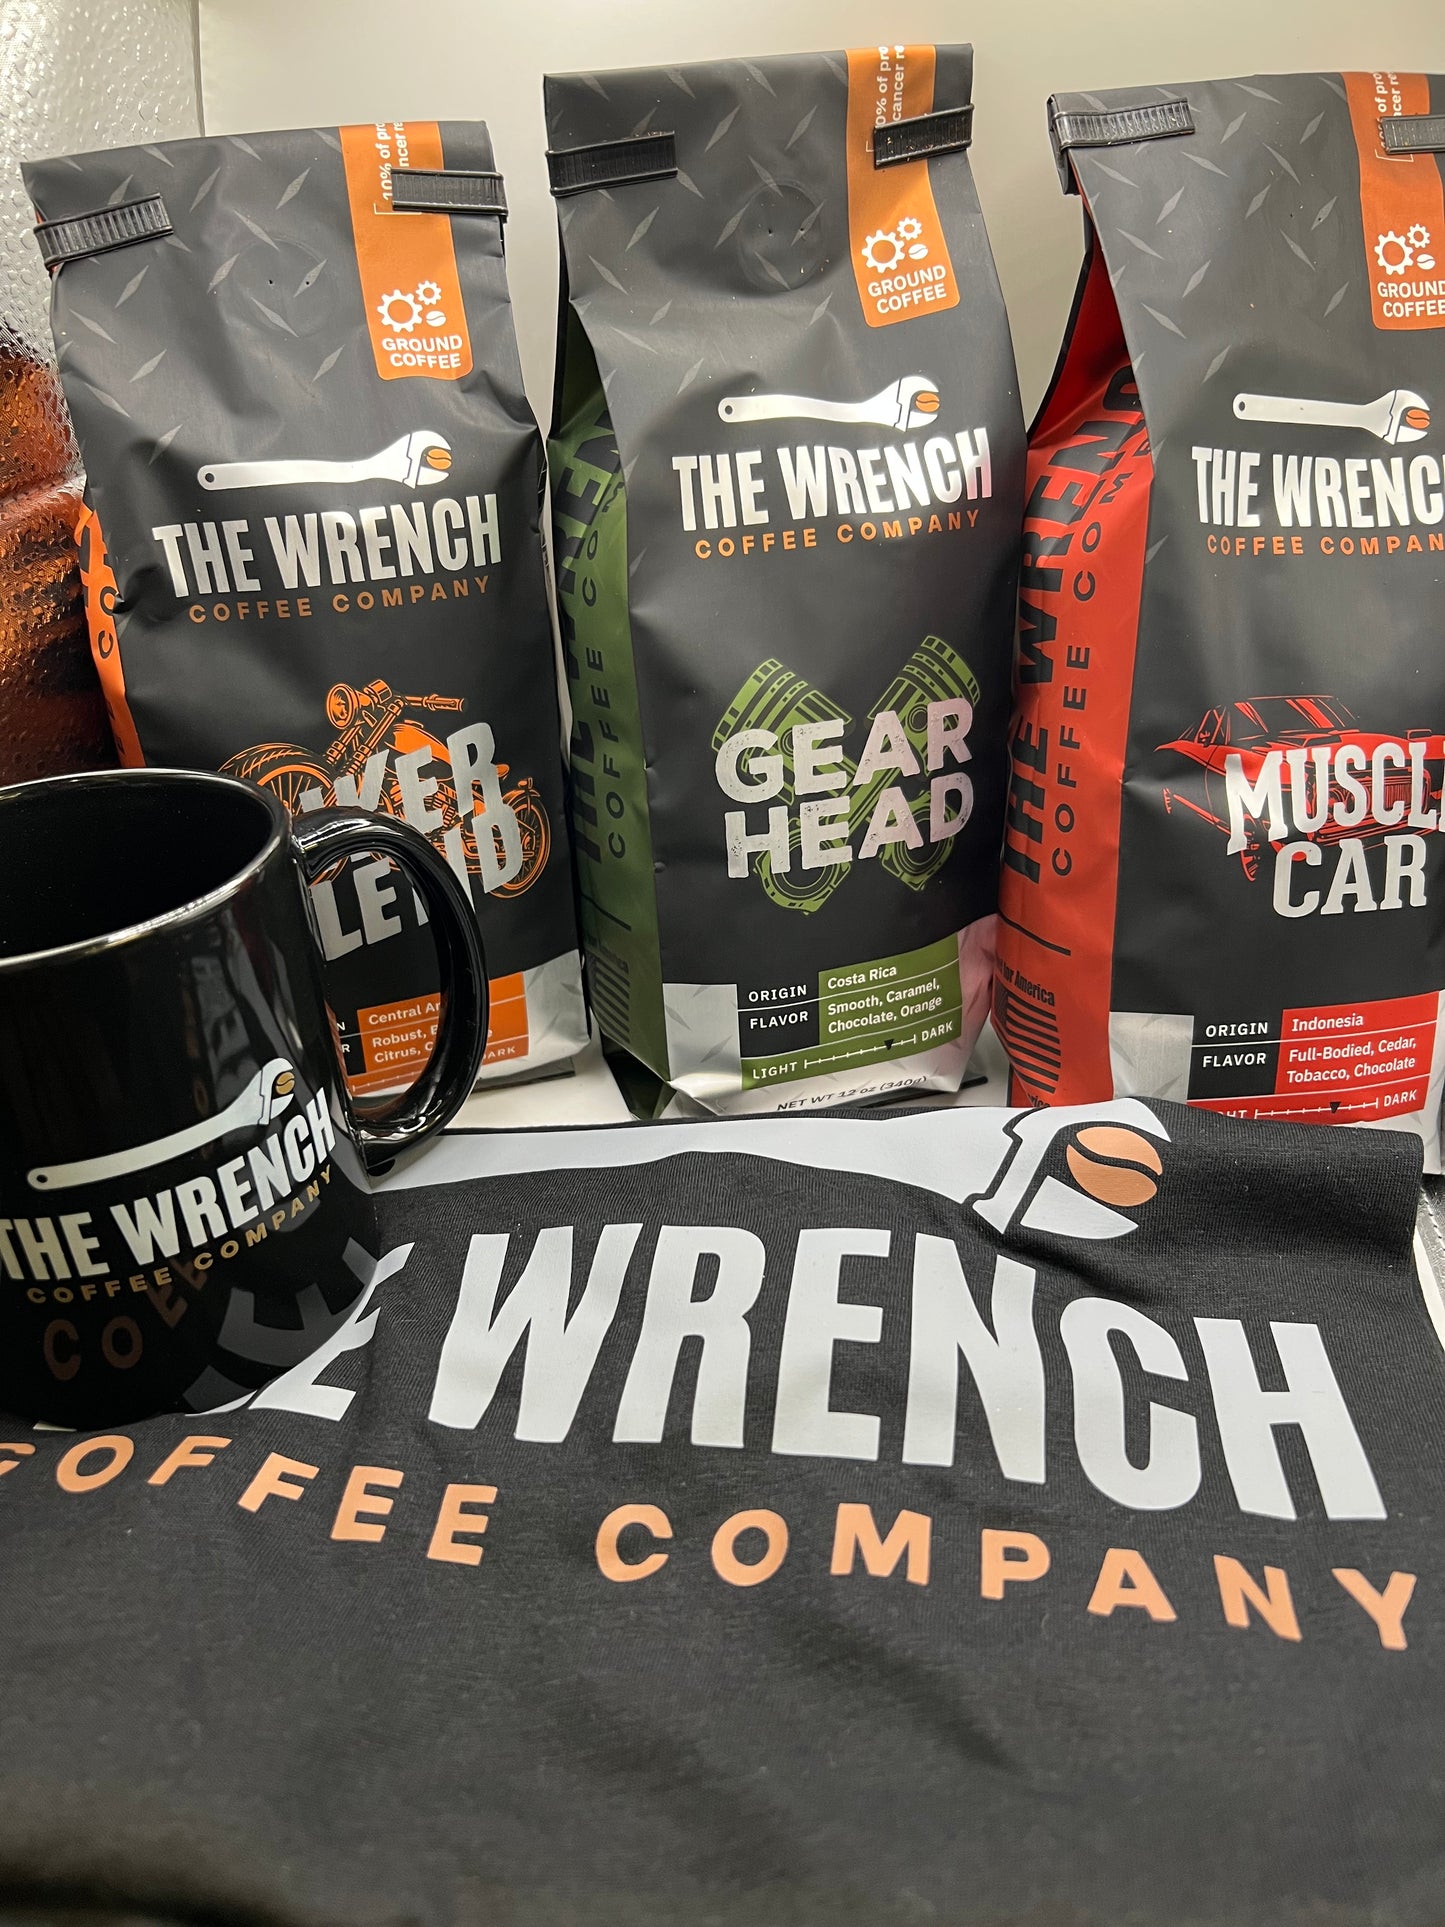 The Wrench Coffee Company TEE.  Black.  Bold tee for bold coffee people.